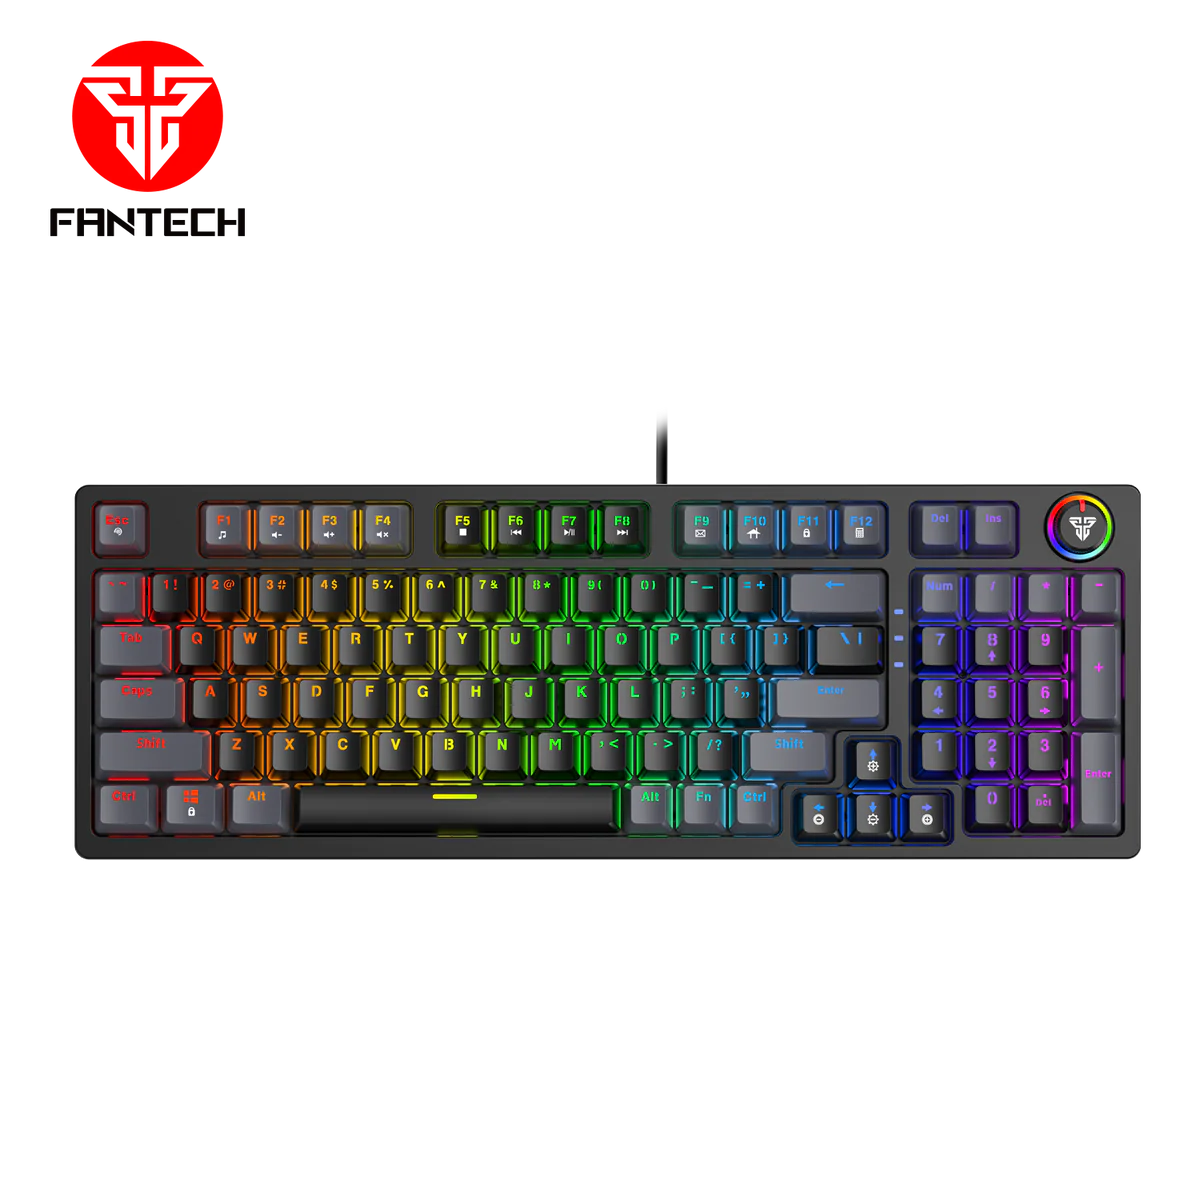 Fantech Atom96 MK890 Mechanical Gaming Keyboard with Full Keys Anti-Ghosting